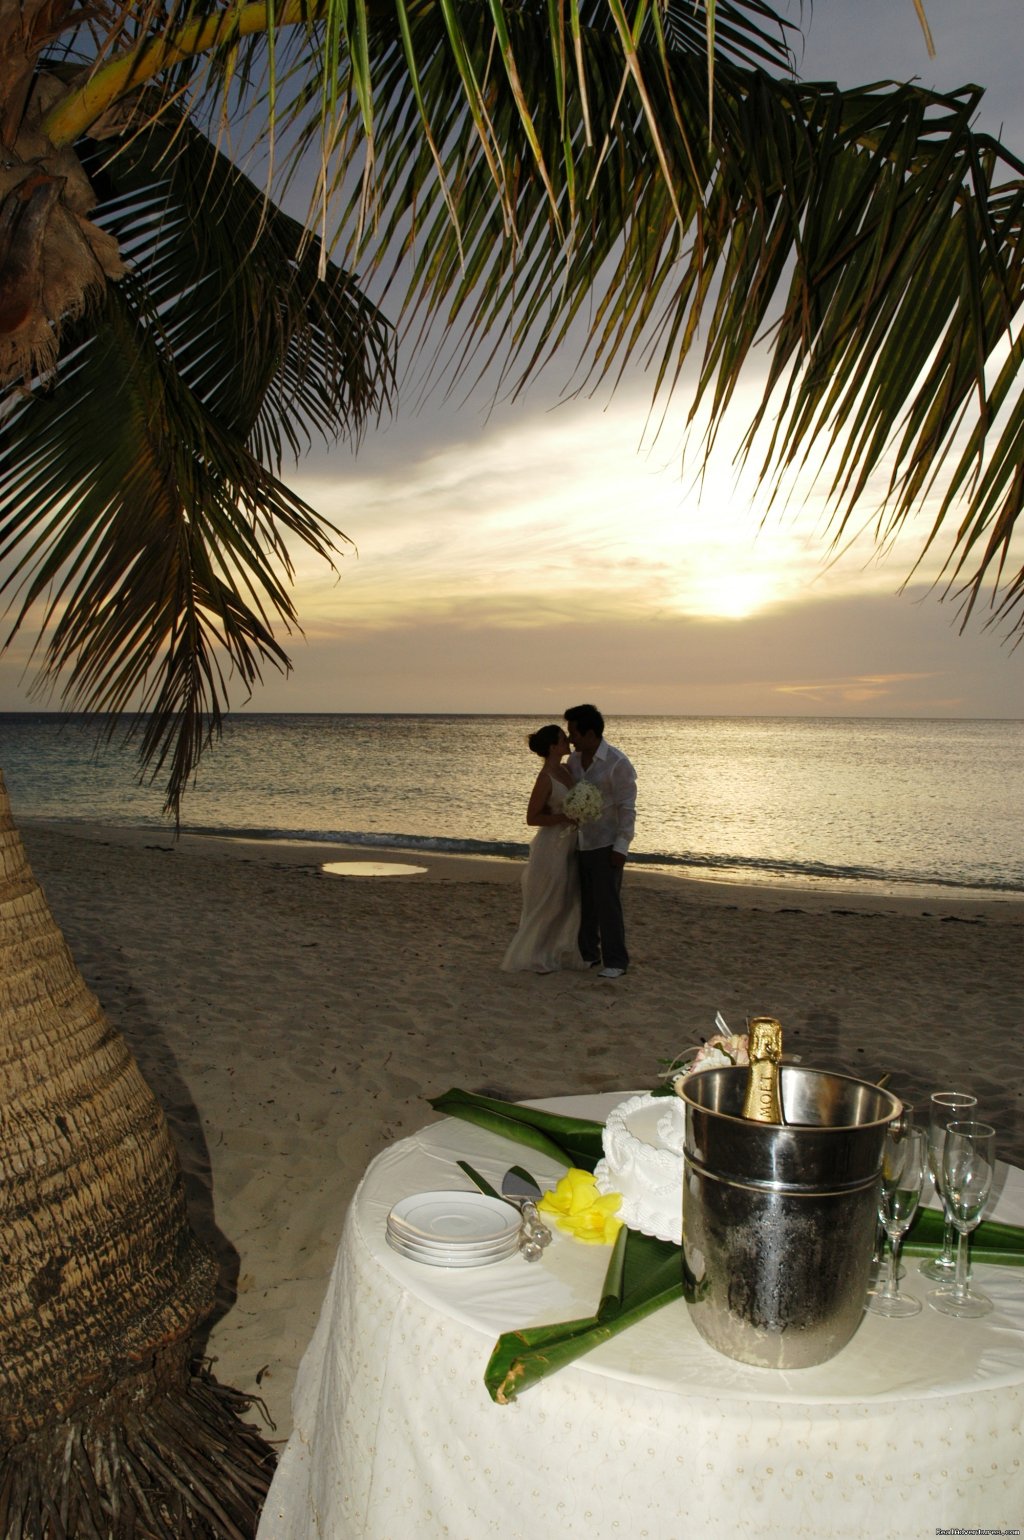 A wedding at the beach |  Look out over paradise at the Mayan Princess! | Image #8/23 | 